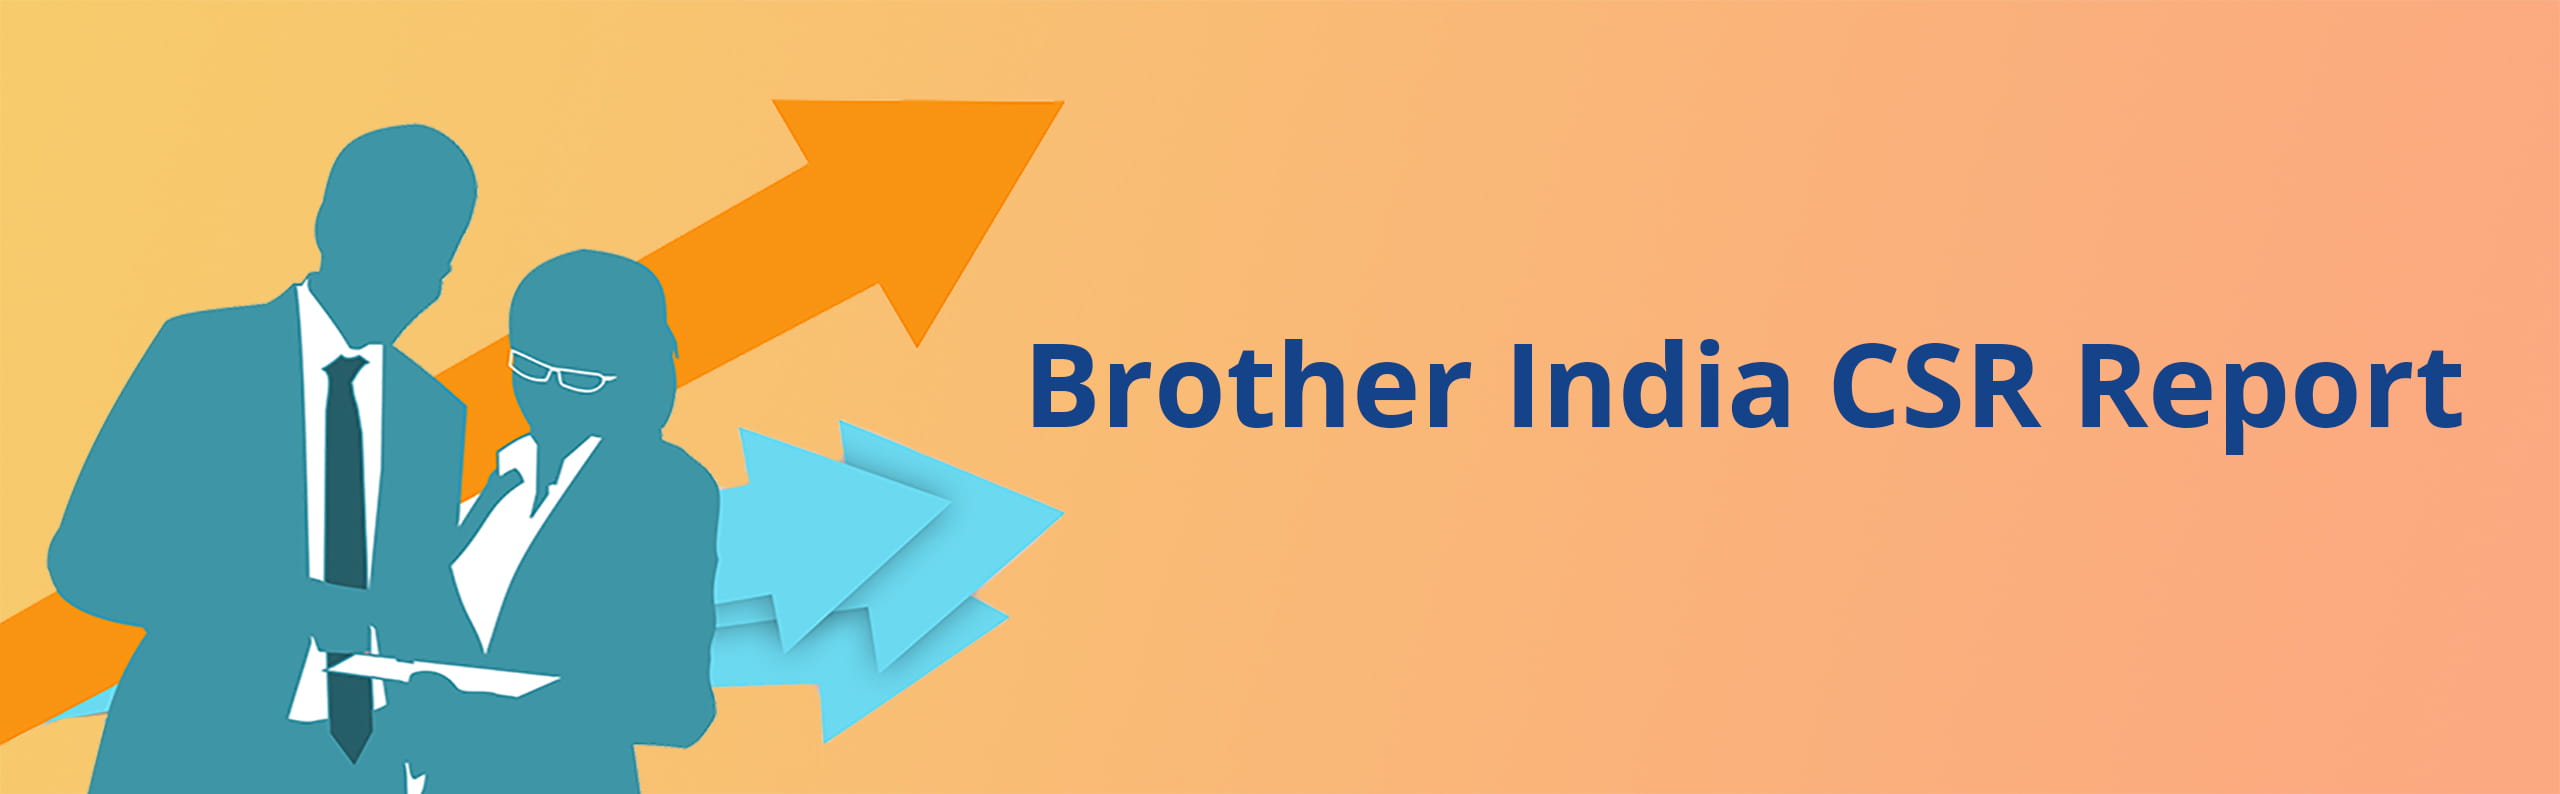 Brother India CSR Report